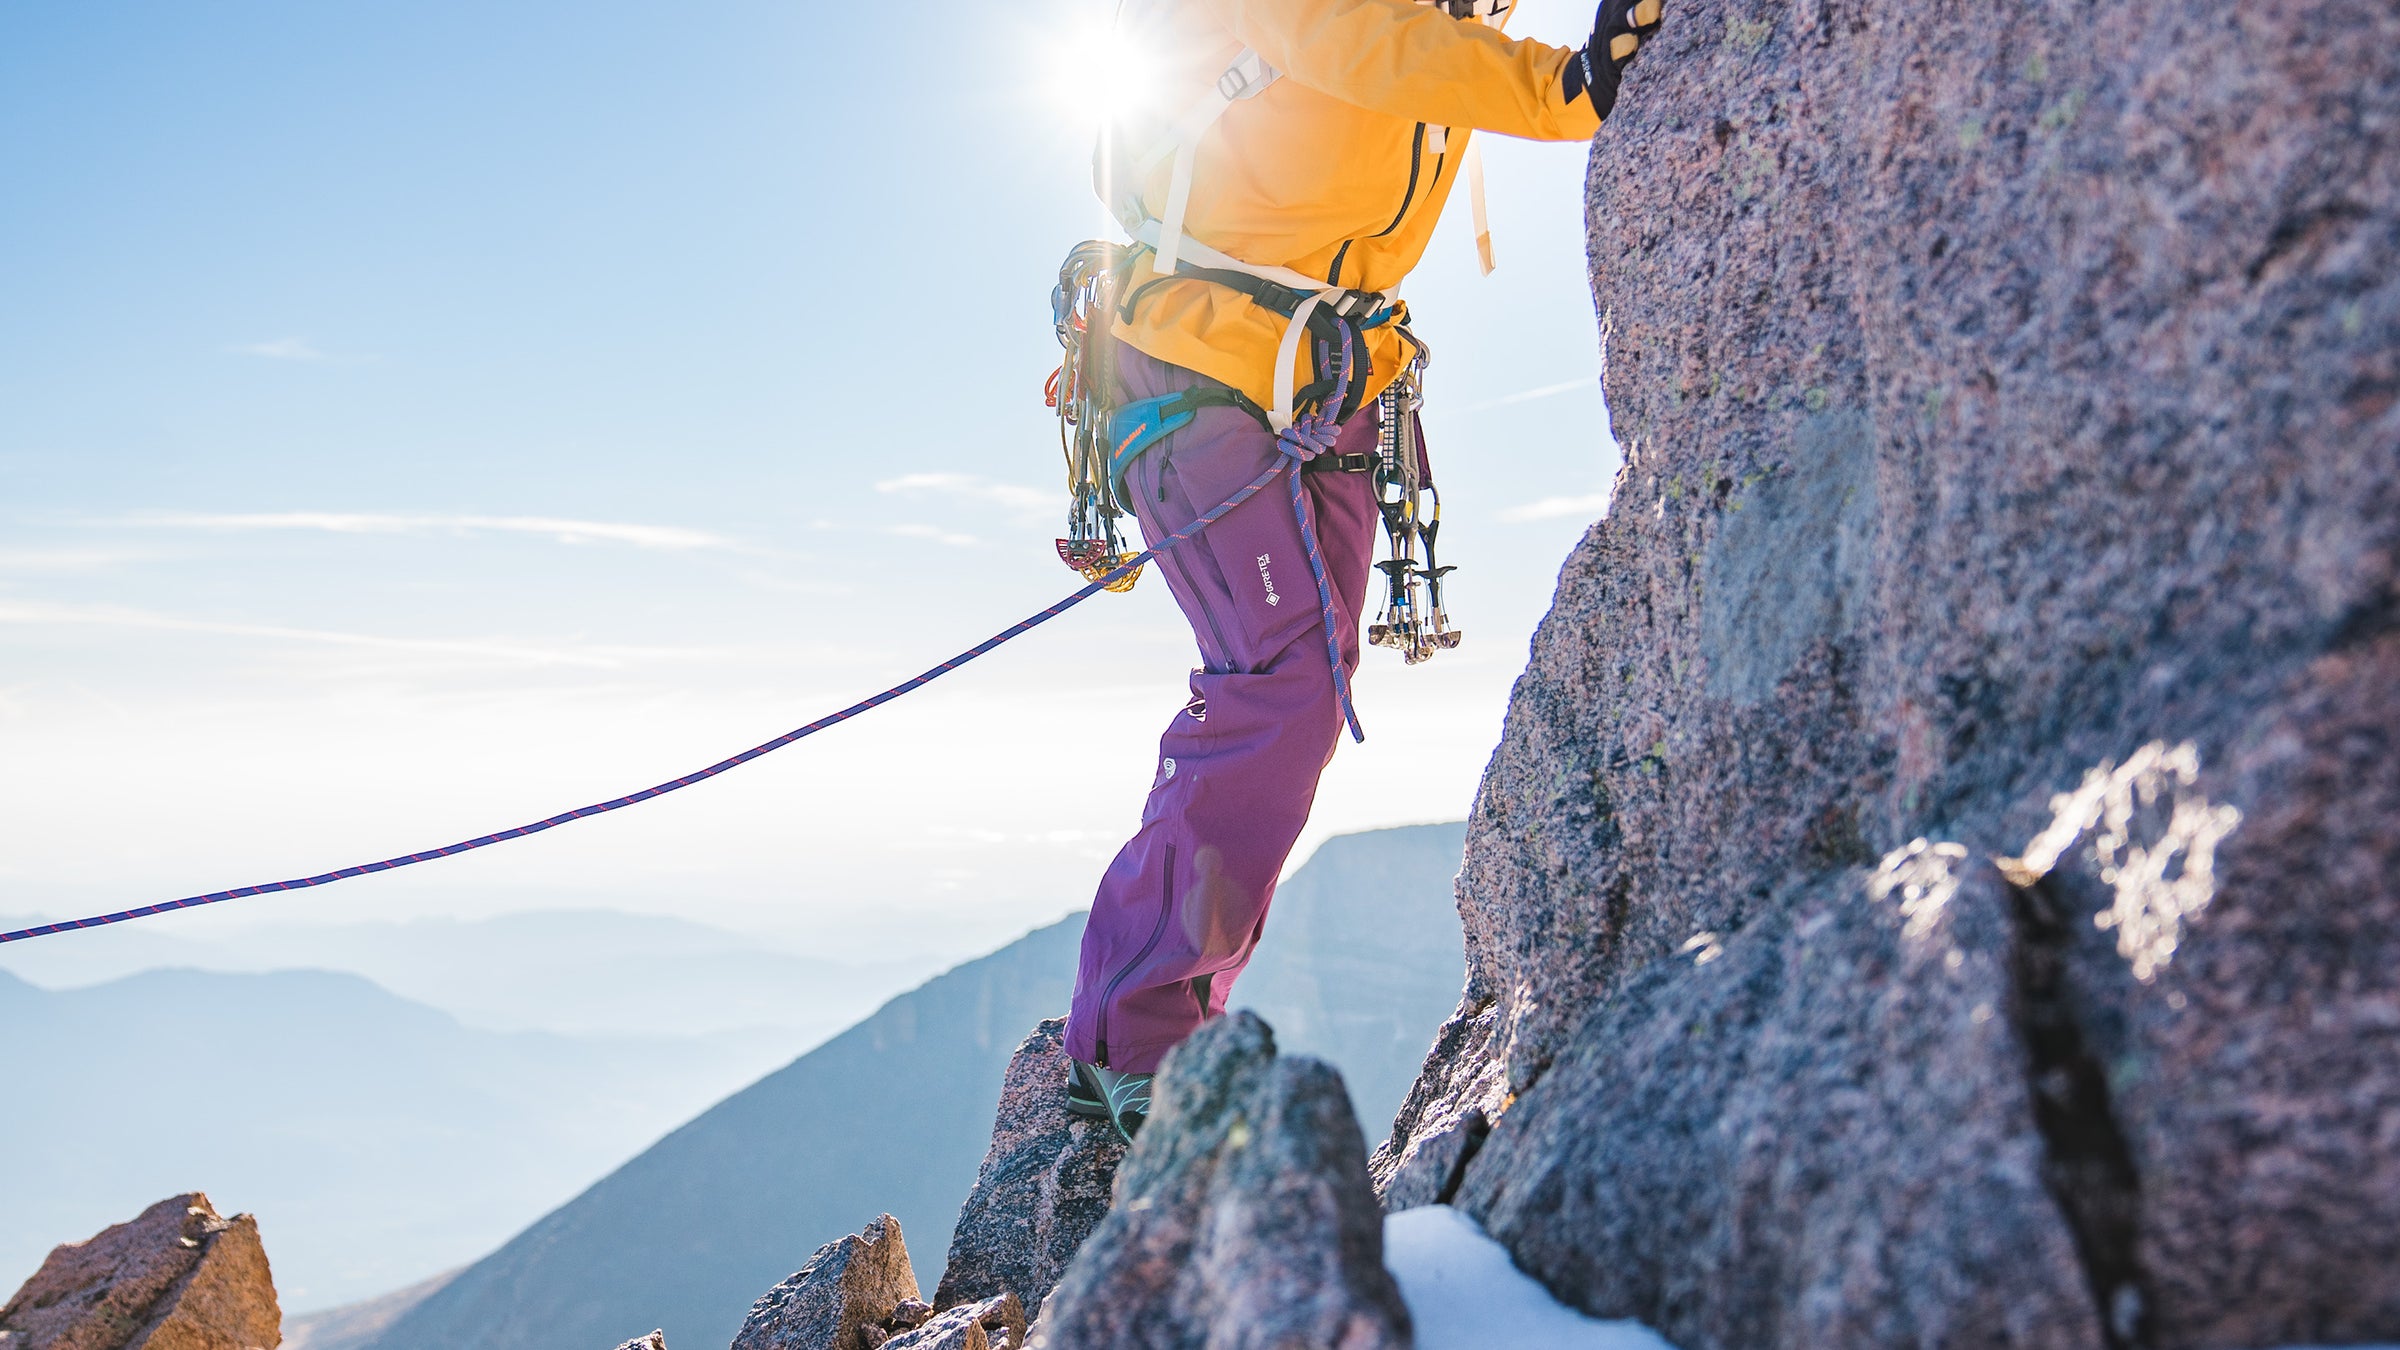 Women's Rock Climbing Clothes, Mountain Climbing Clothing